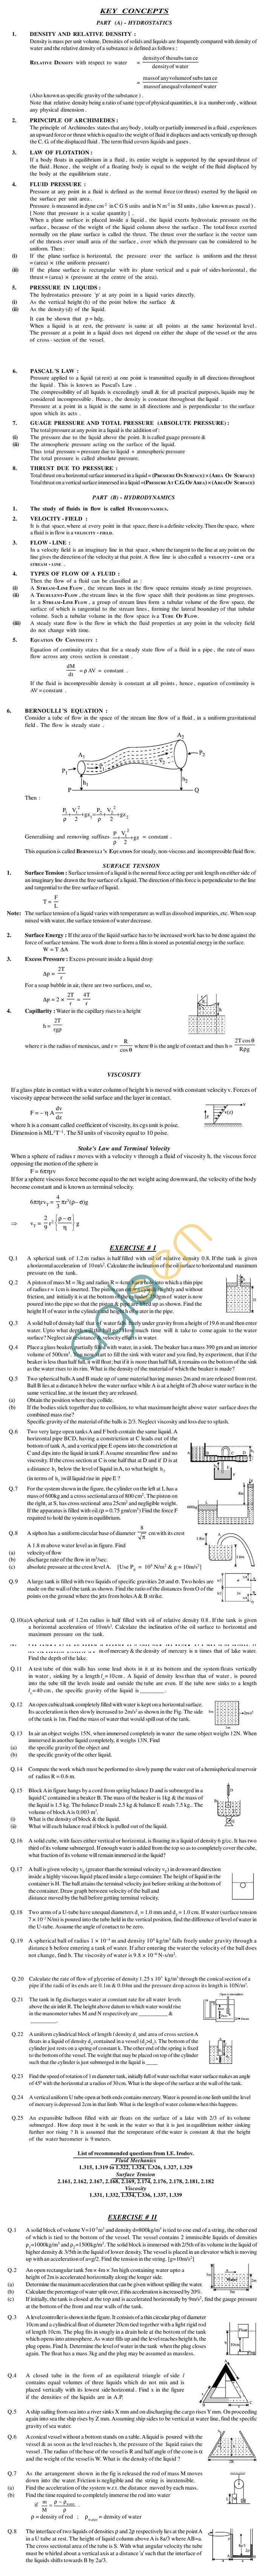 Physics Study Material - Fluid Mechanics